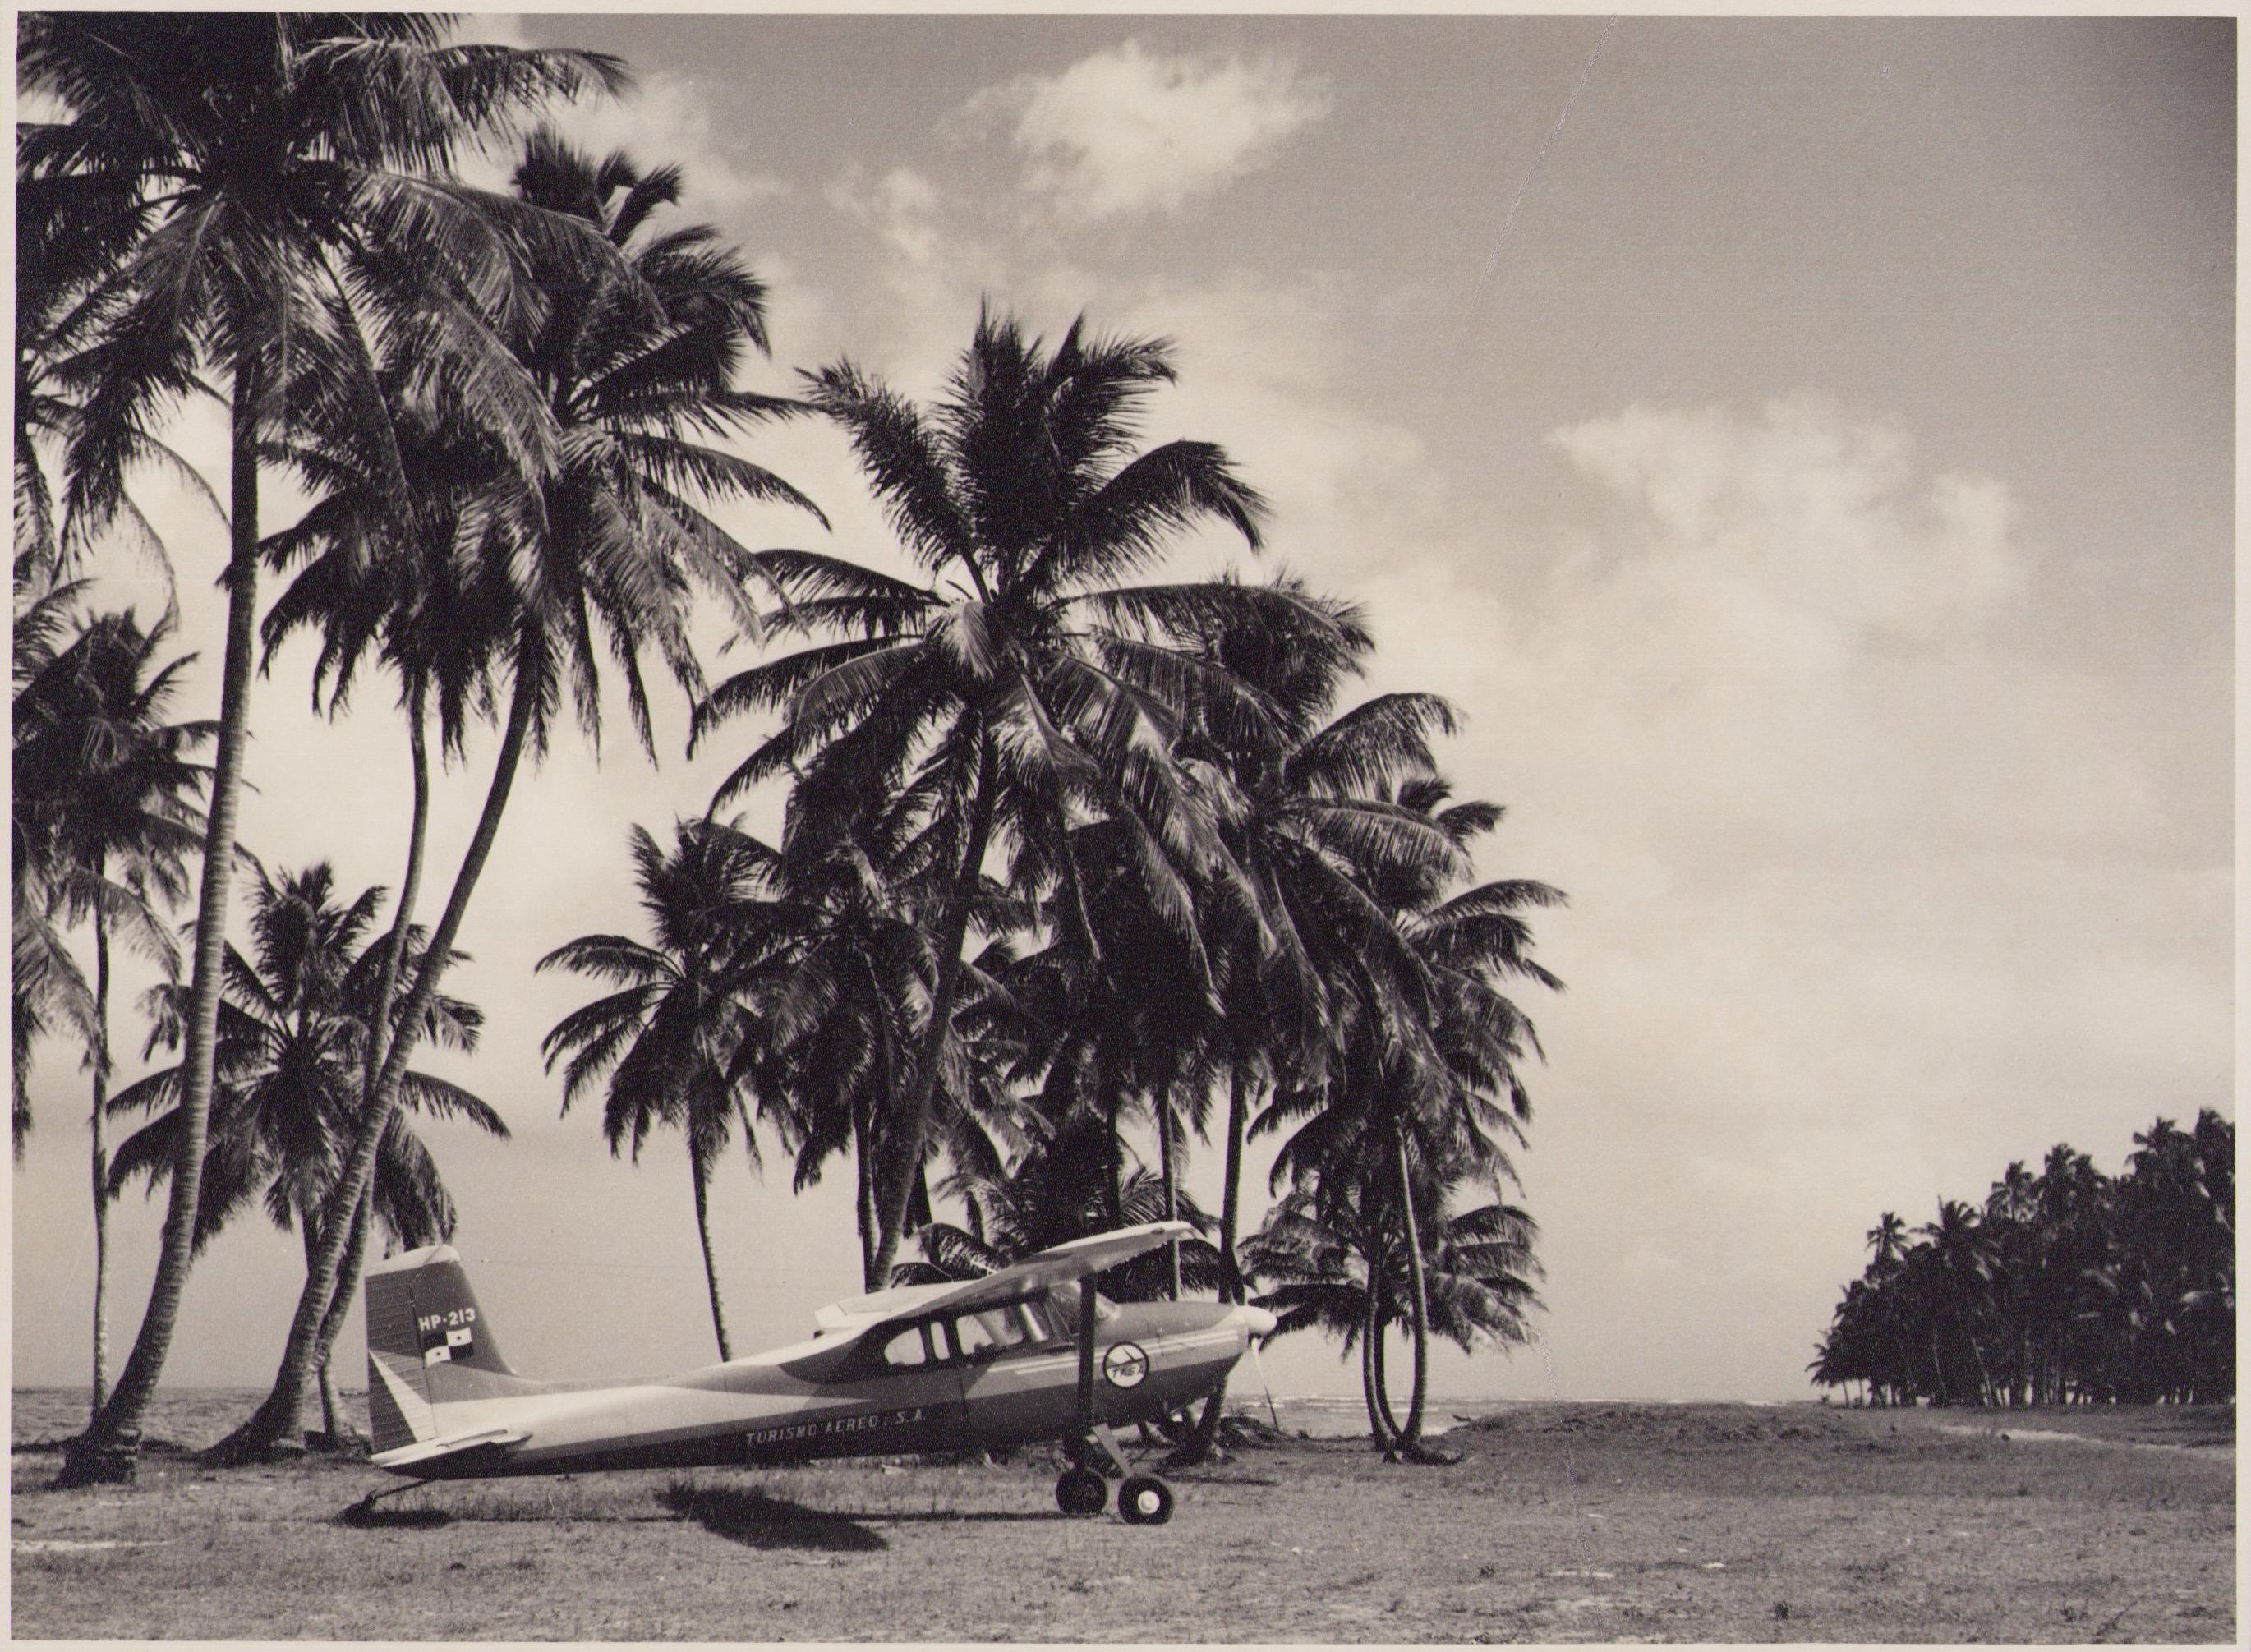 Hanna Seidel Portrait Photograph - Panama, Airplane, Black and White Photography, 1960s, 17, 2 x 23, 2 cm